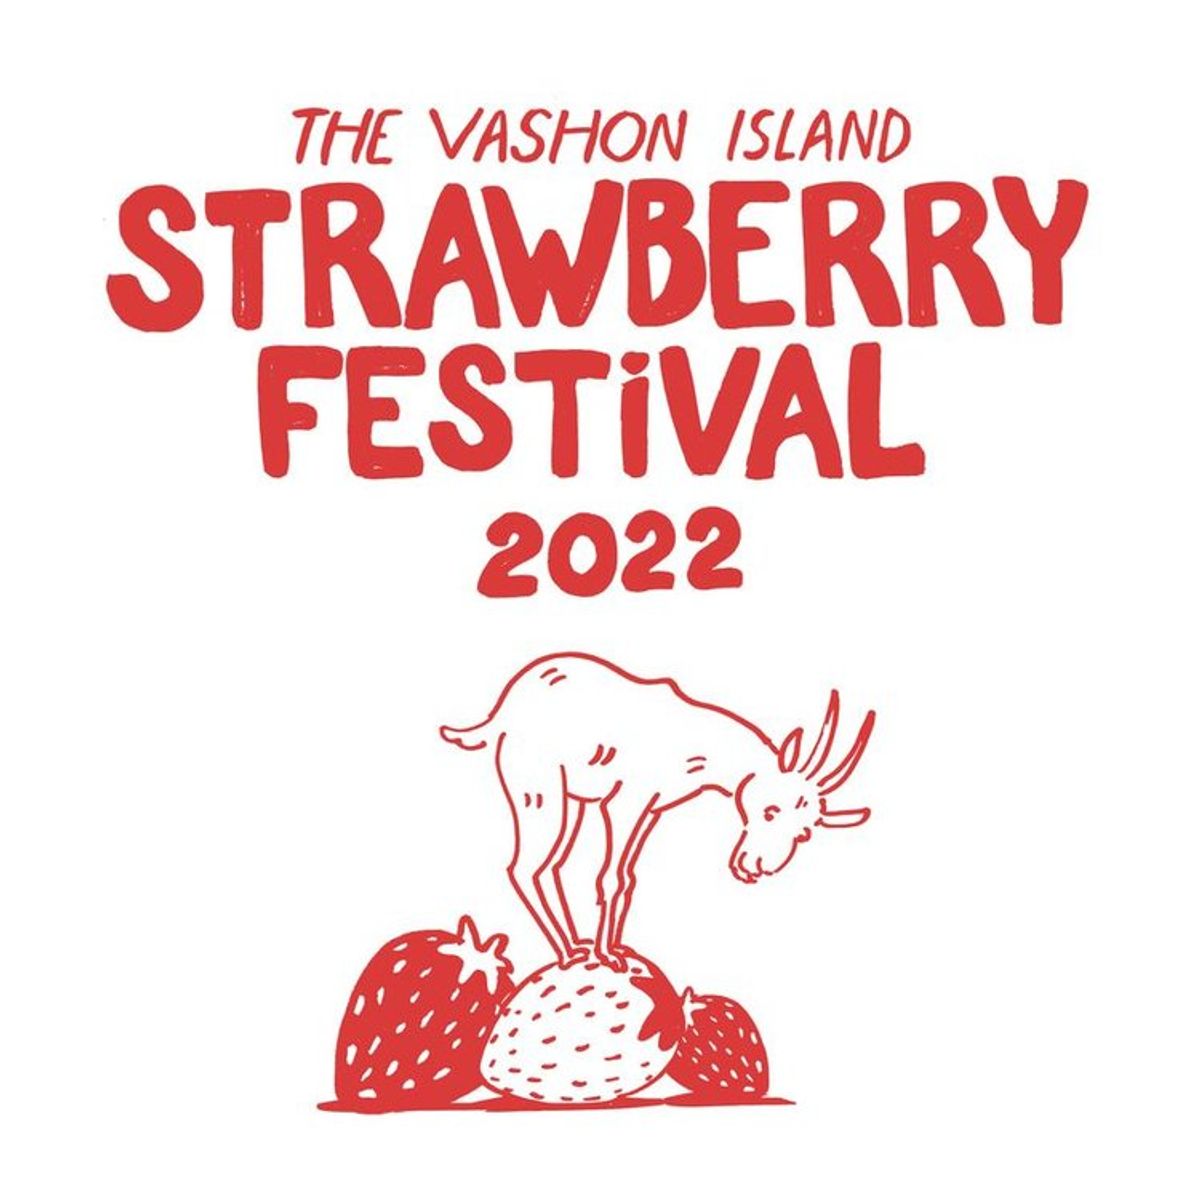 Vashon Island Strawberry Festival 2022 Every day, through Jul 17